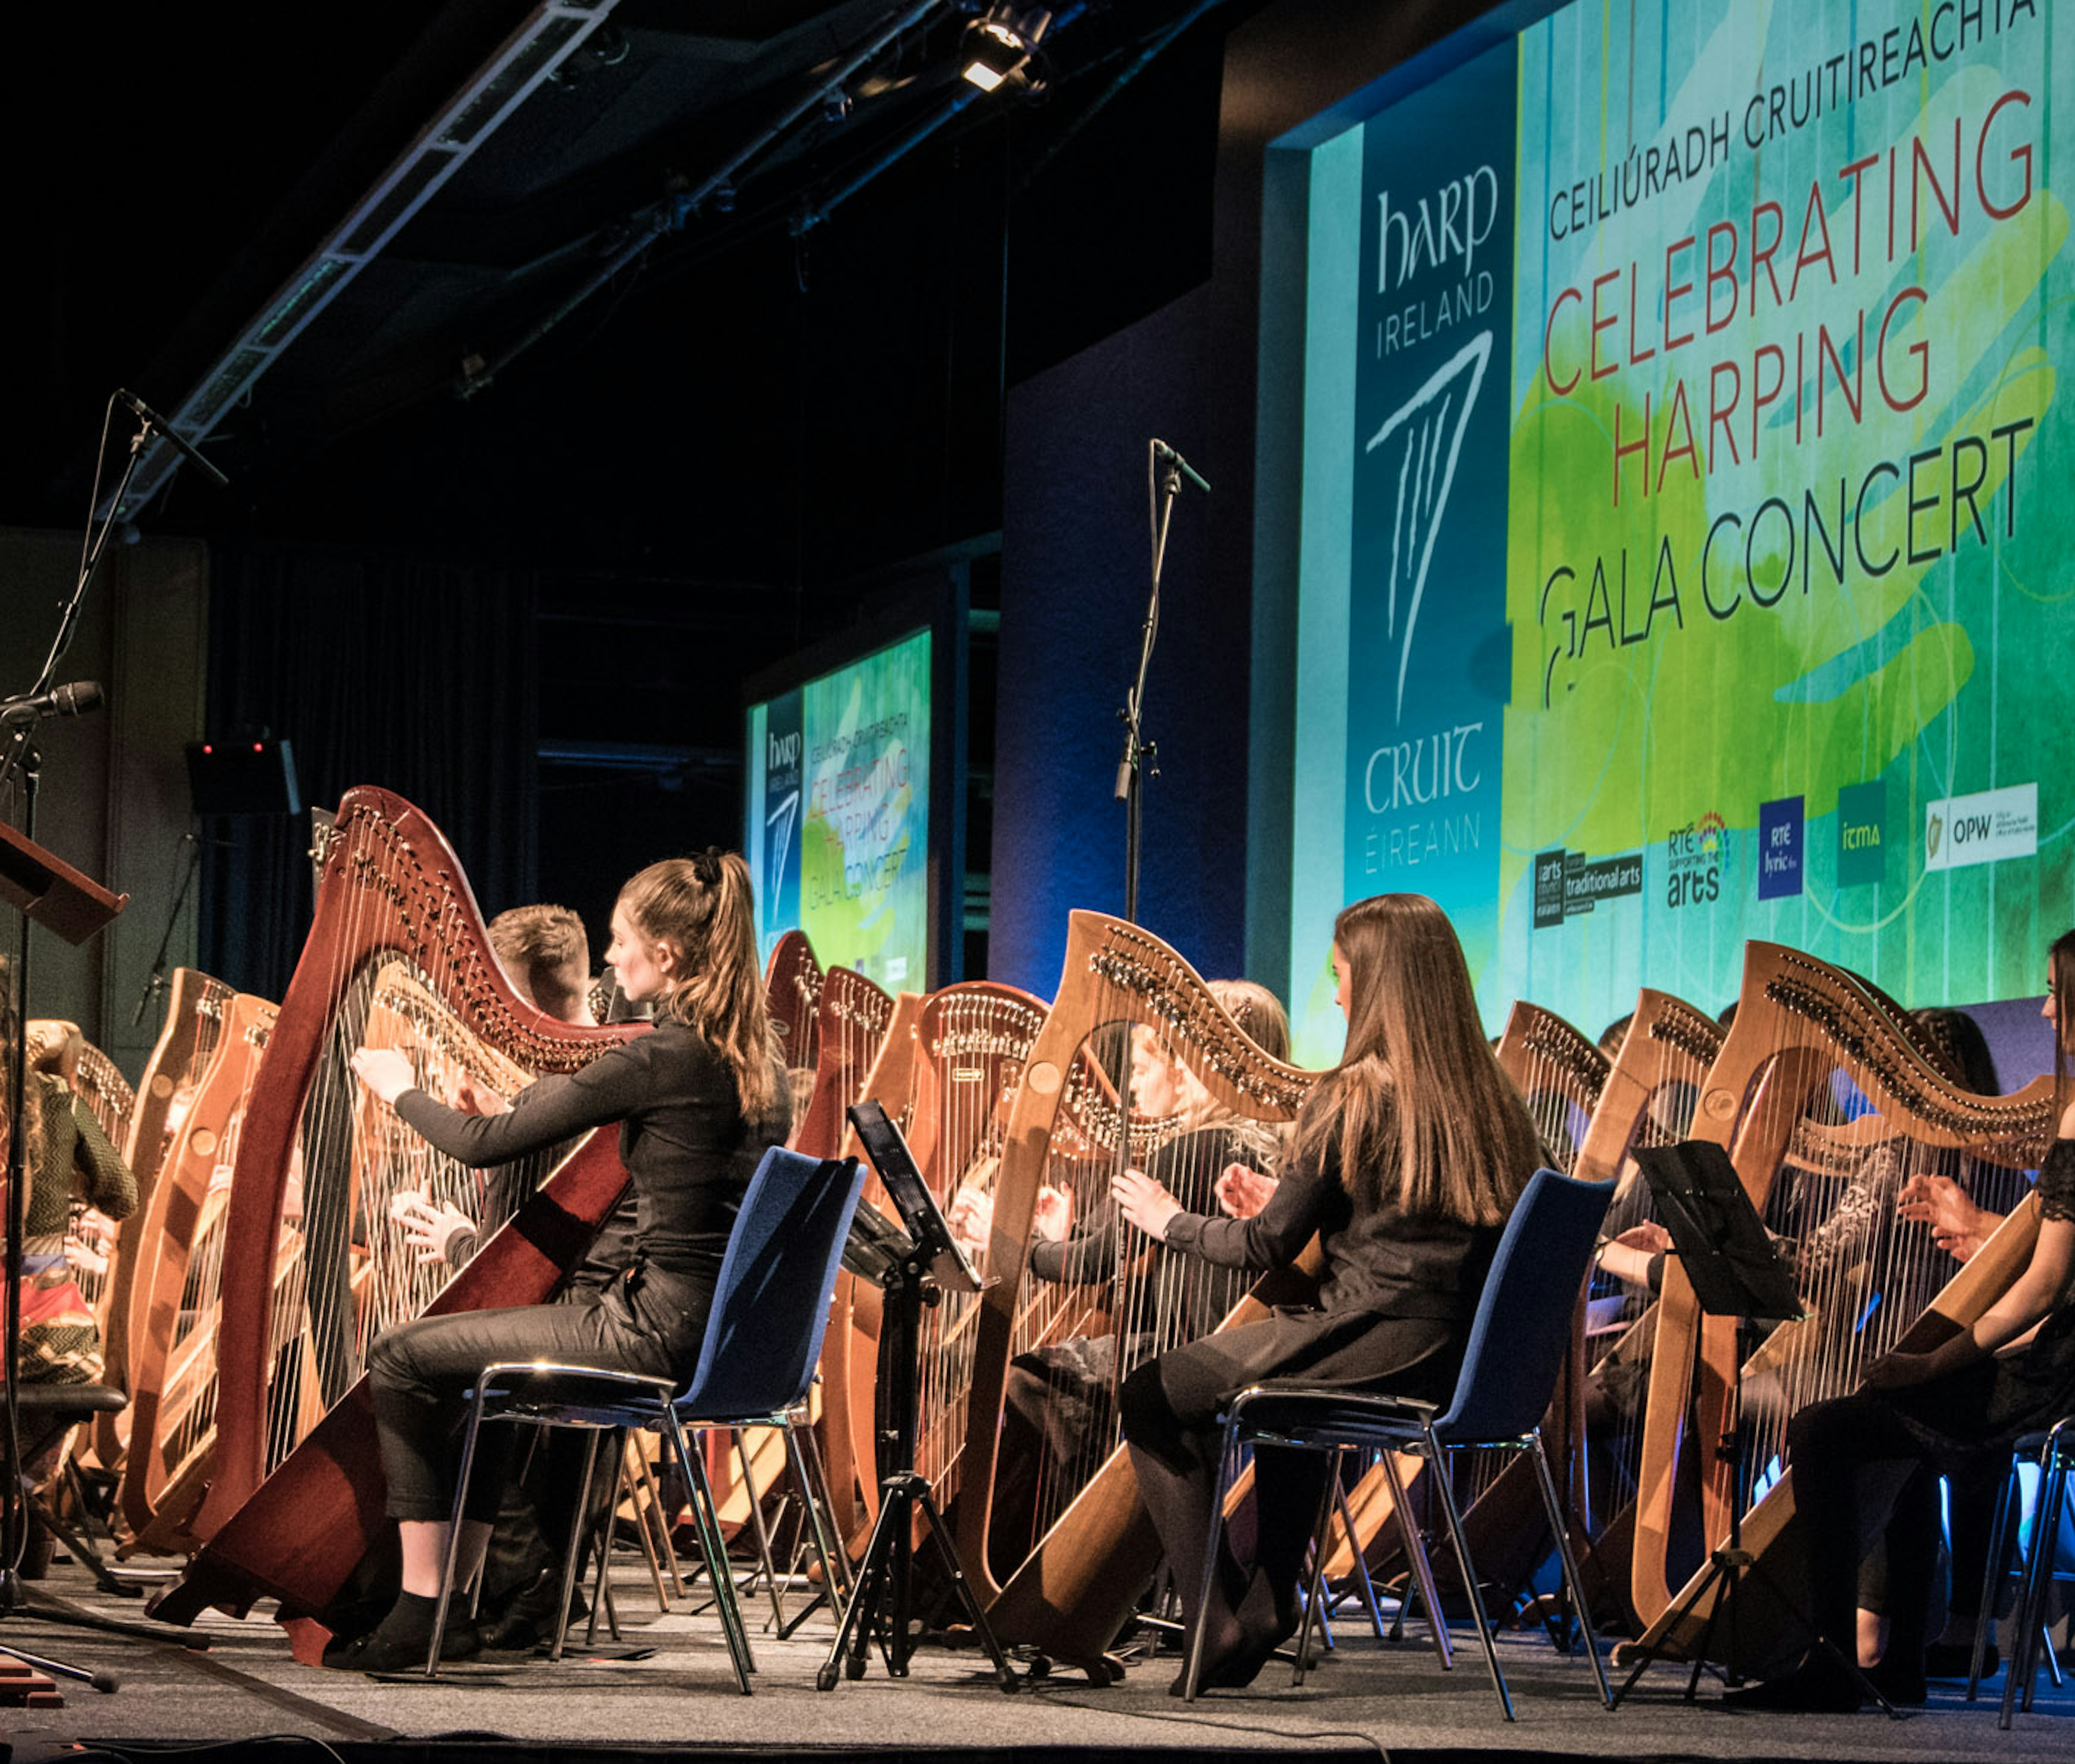 Gala concert with Harp Ireland